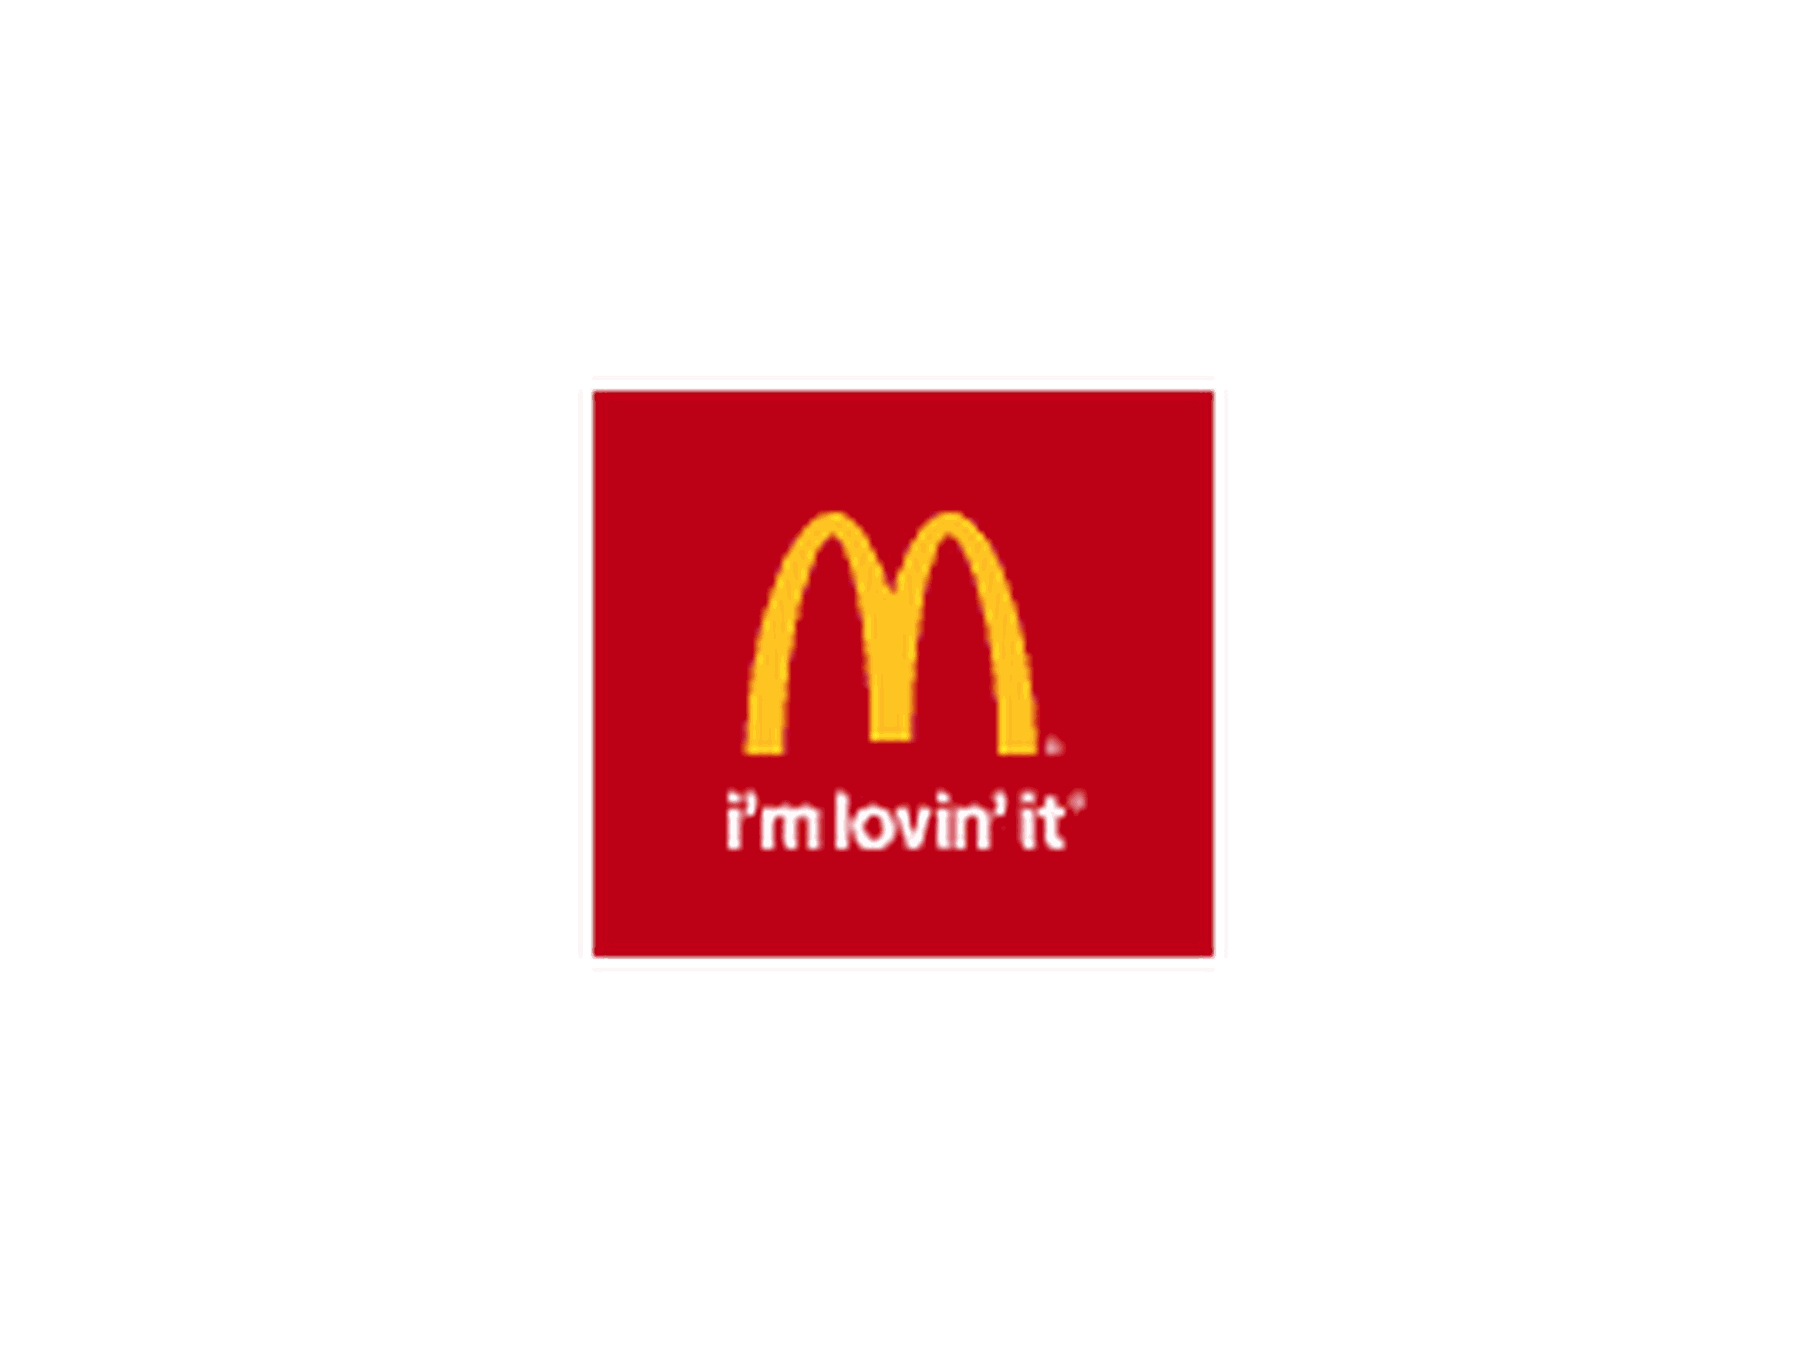 McDonald's Promo Code